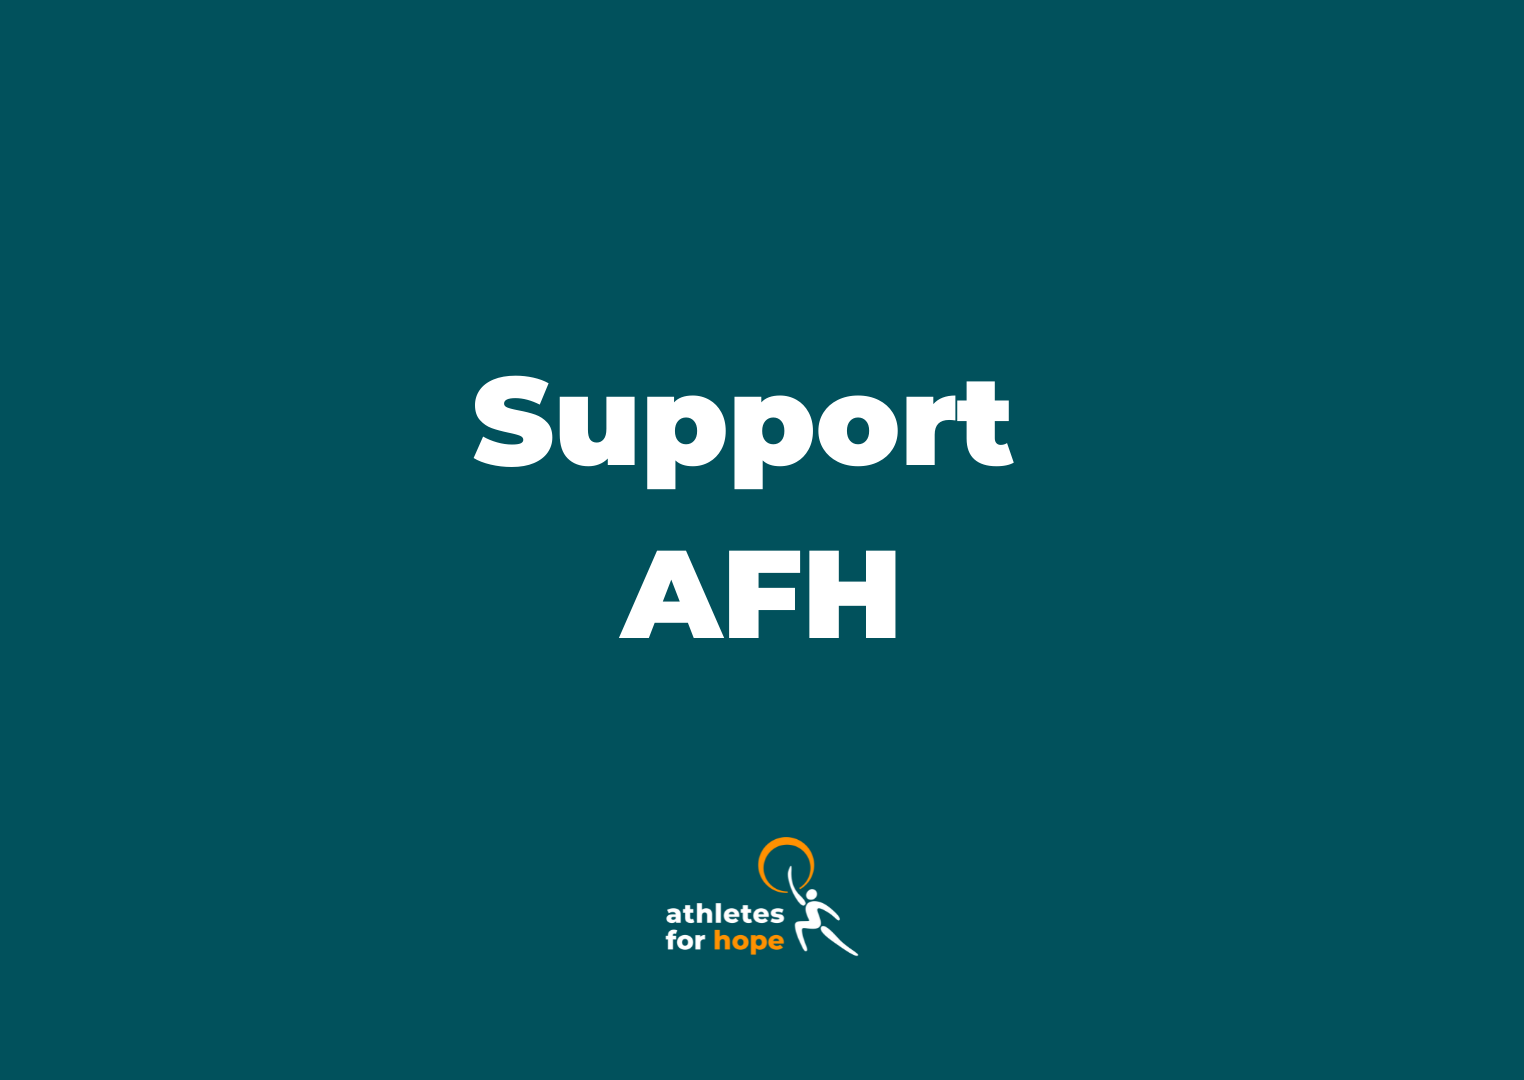 Support AFH